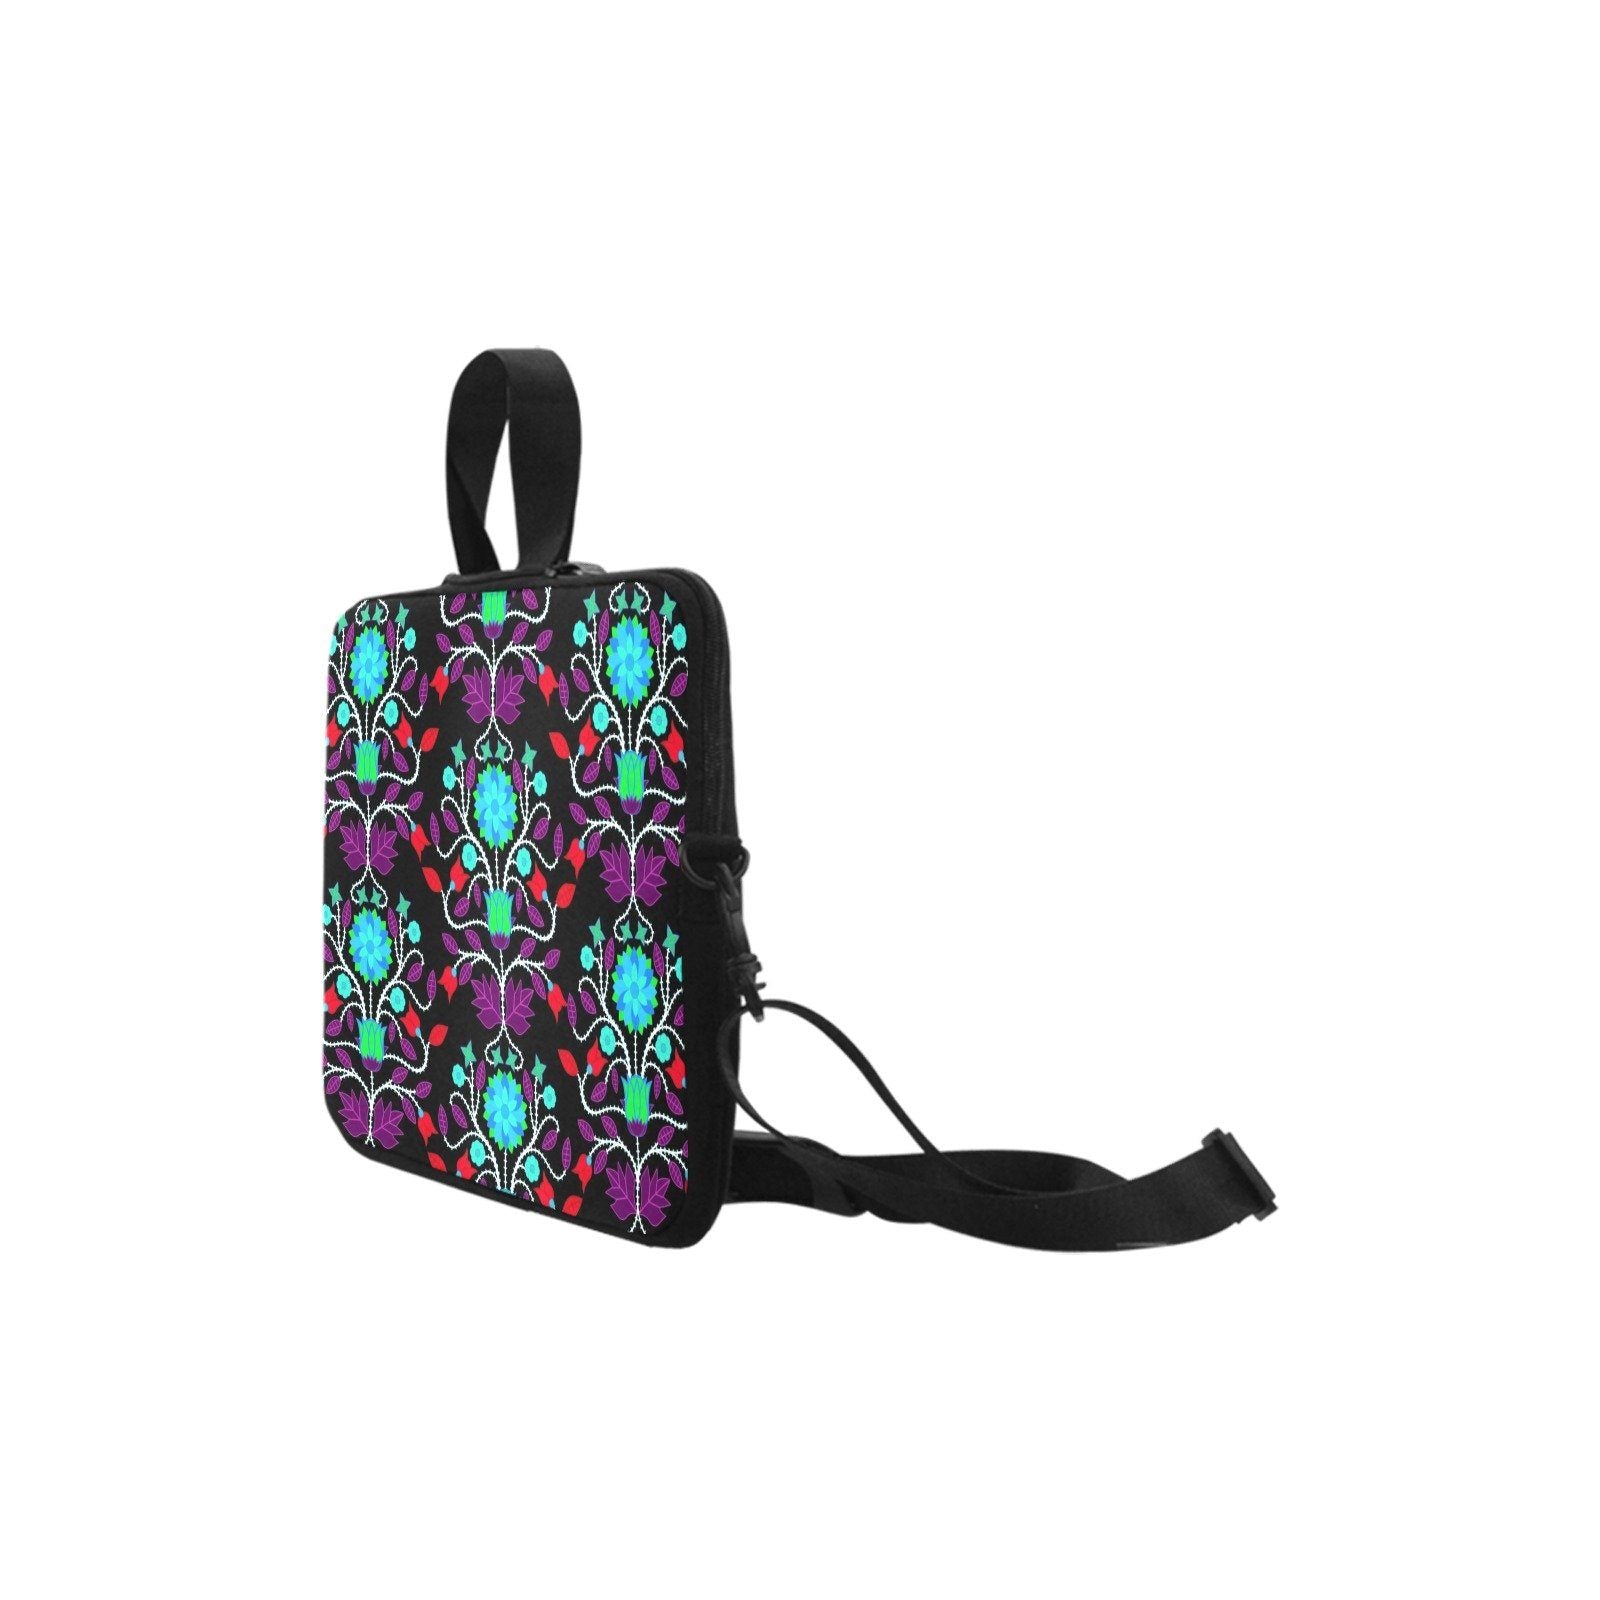 Floral Beadwork Four Clans Winter Laptop Handbags 11" bag e-joyer 